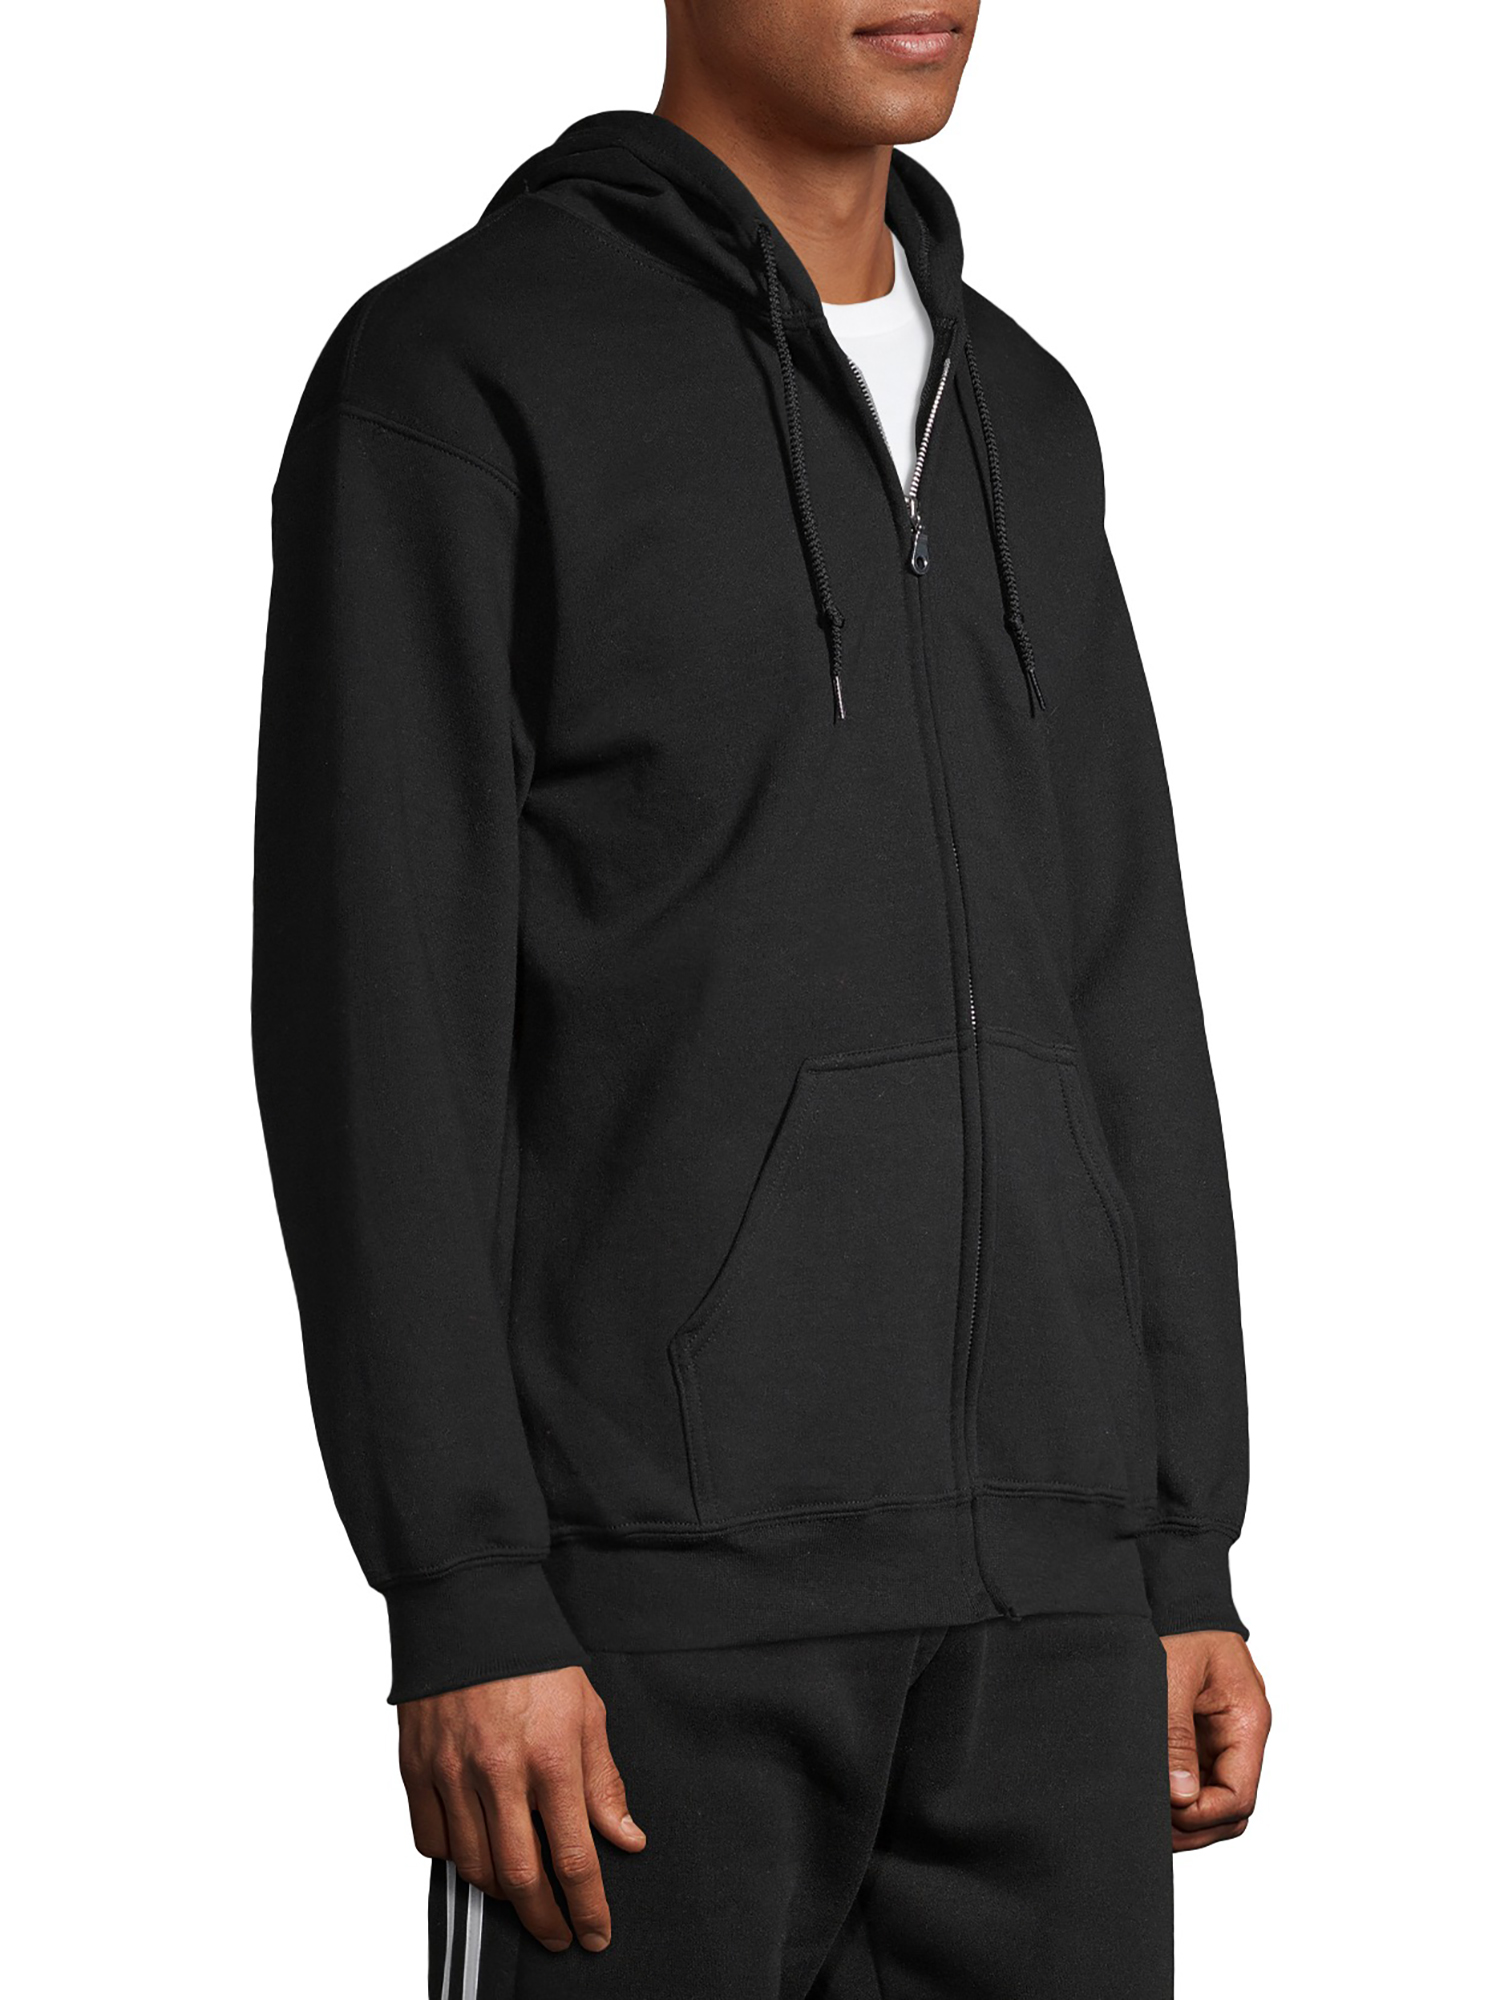 Gildan Unisex Heavy Blend Fleece Full Zip Hooded Sweatshirt, Size Small to 3XL - image 5 of 6